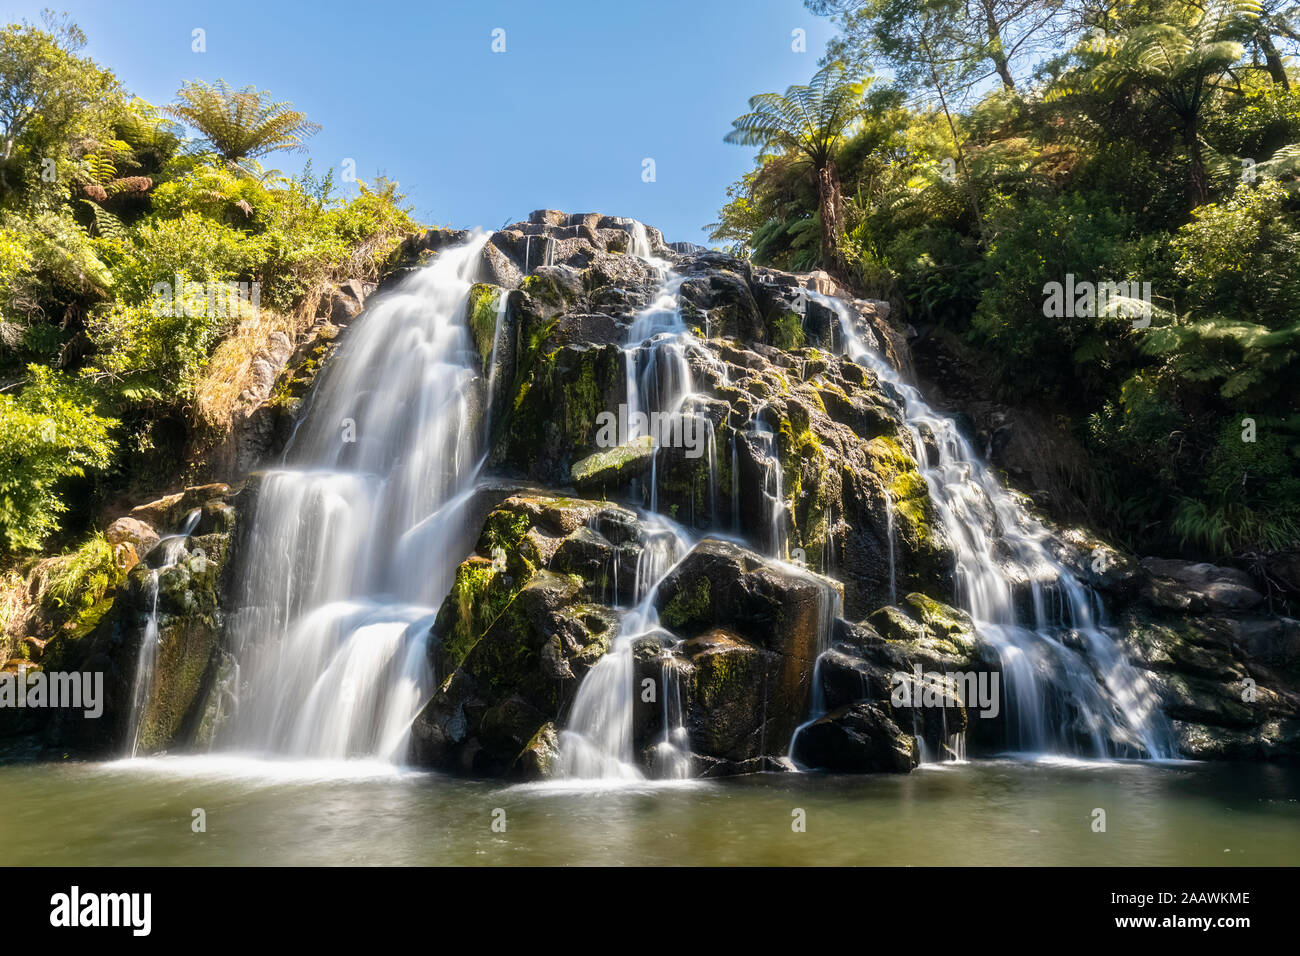 New Zealand, North Island, Waikato, Waikino, scenic view of Owharoa Falls Stock Photo